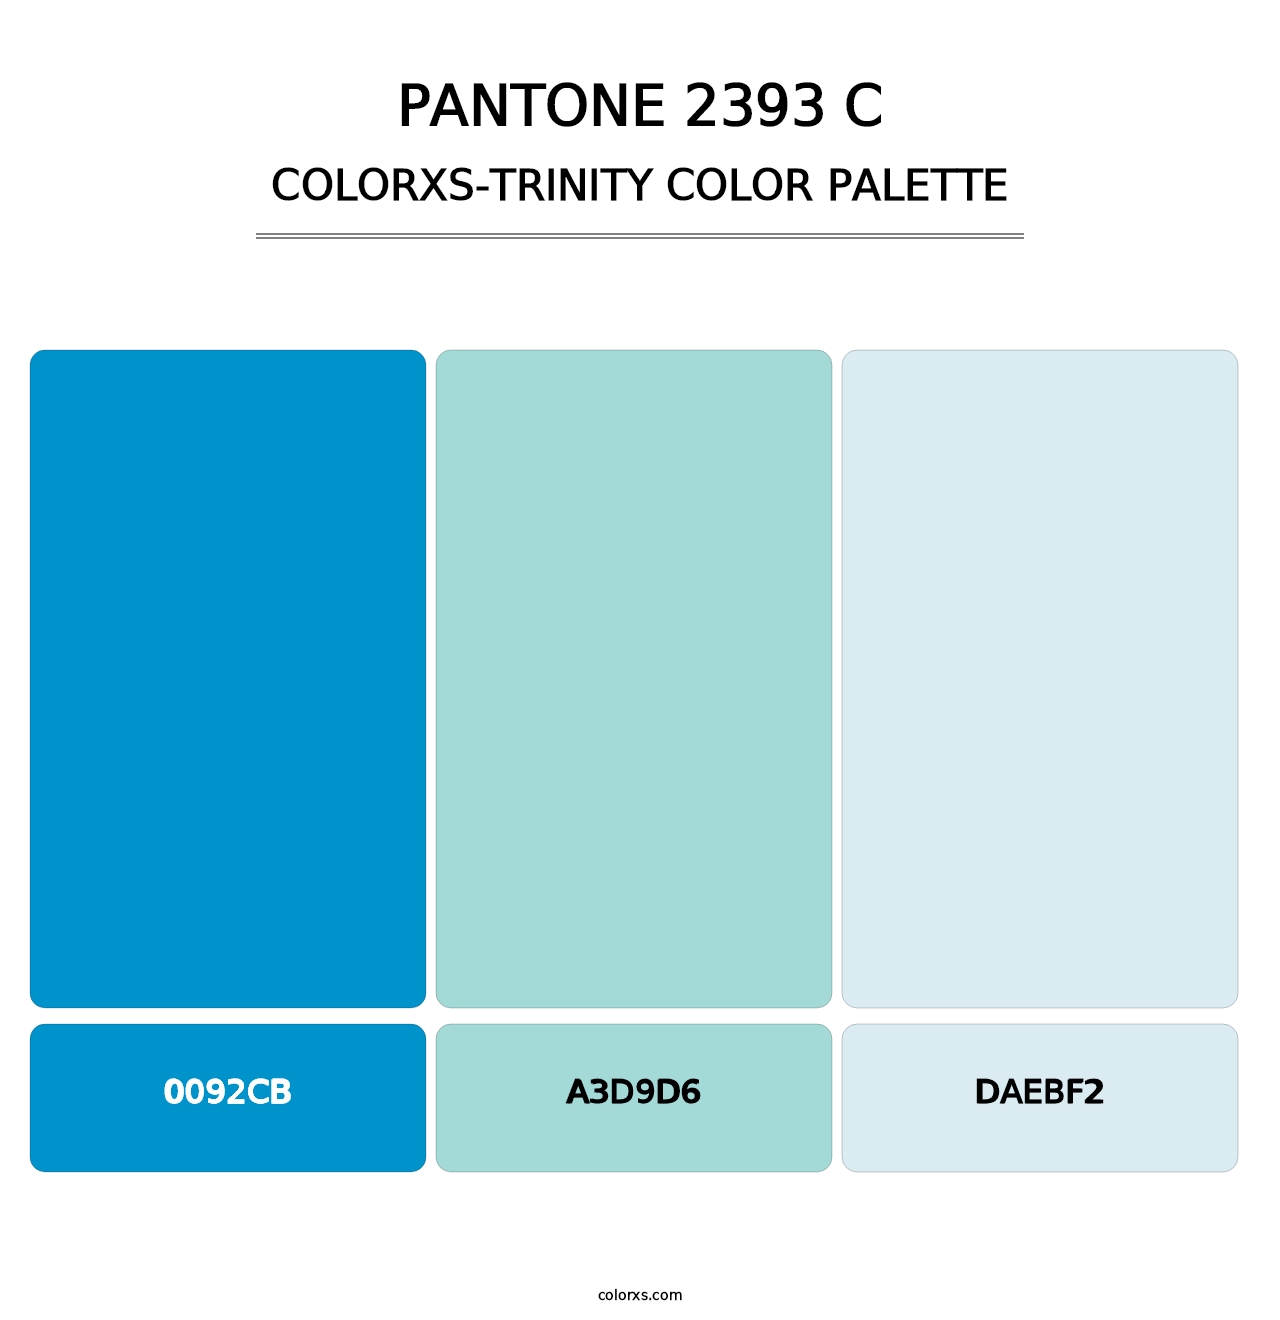 PANTONE 2393 C - Colorxs Trinity Palette